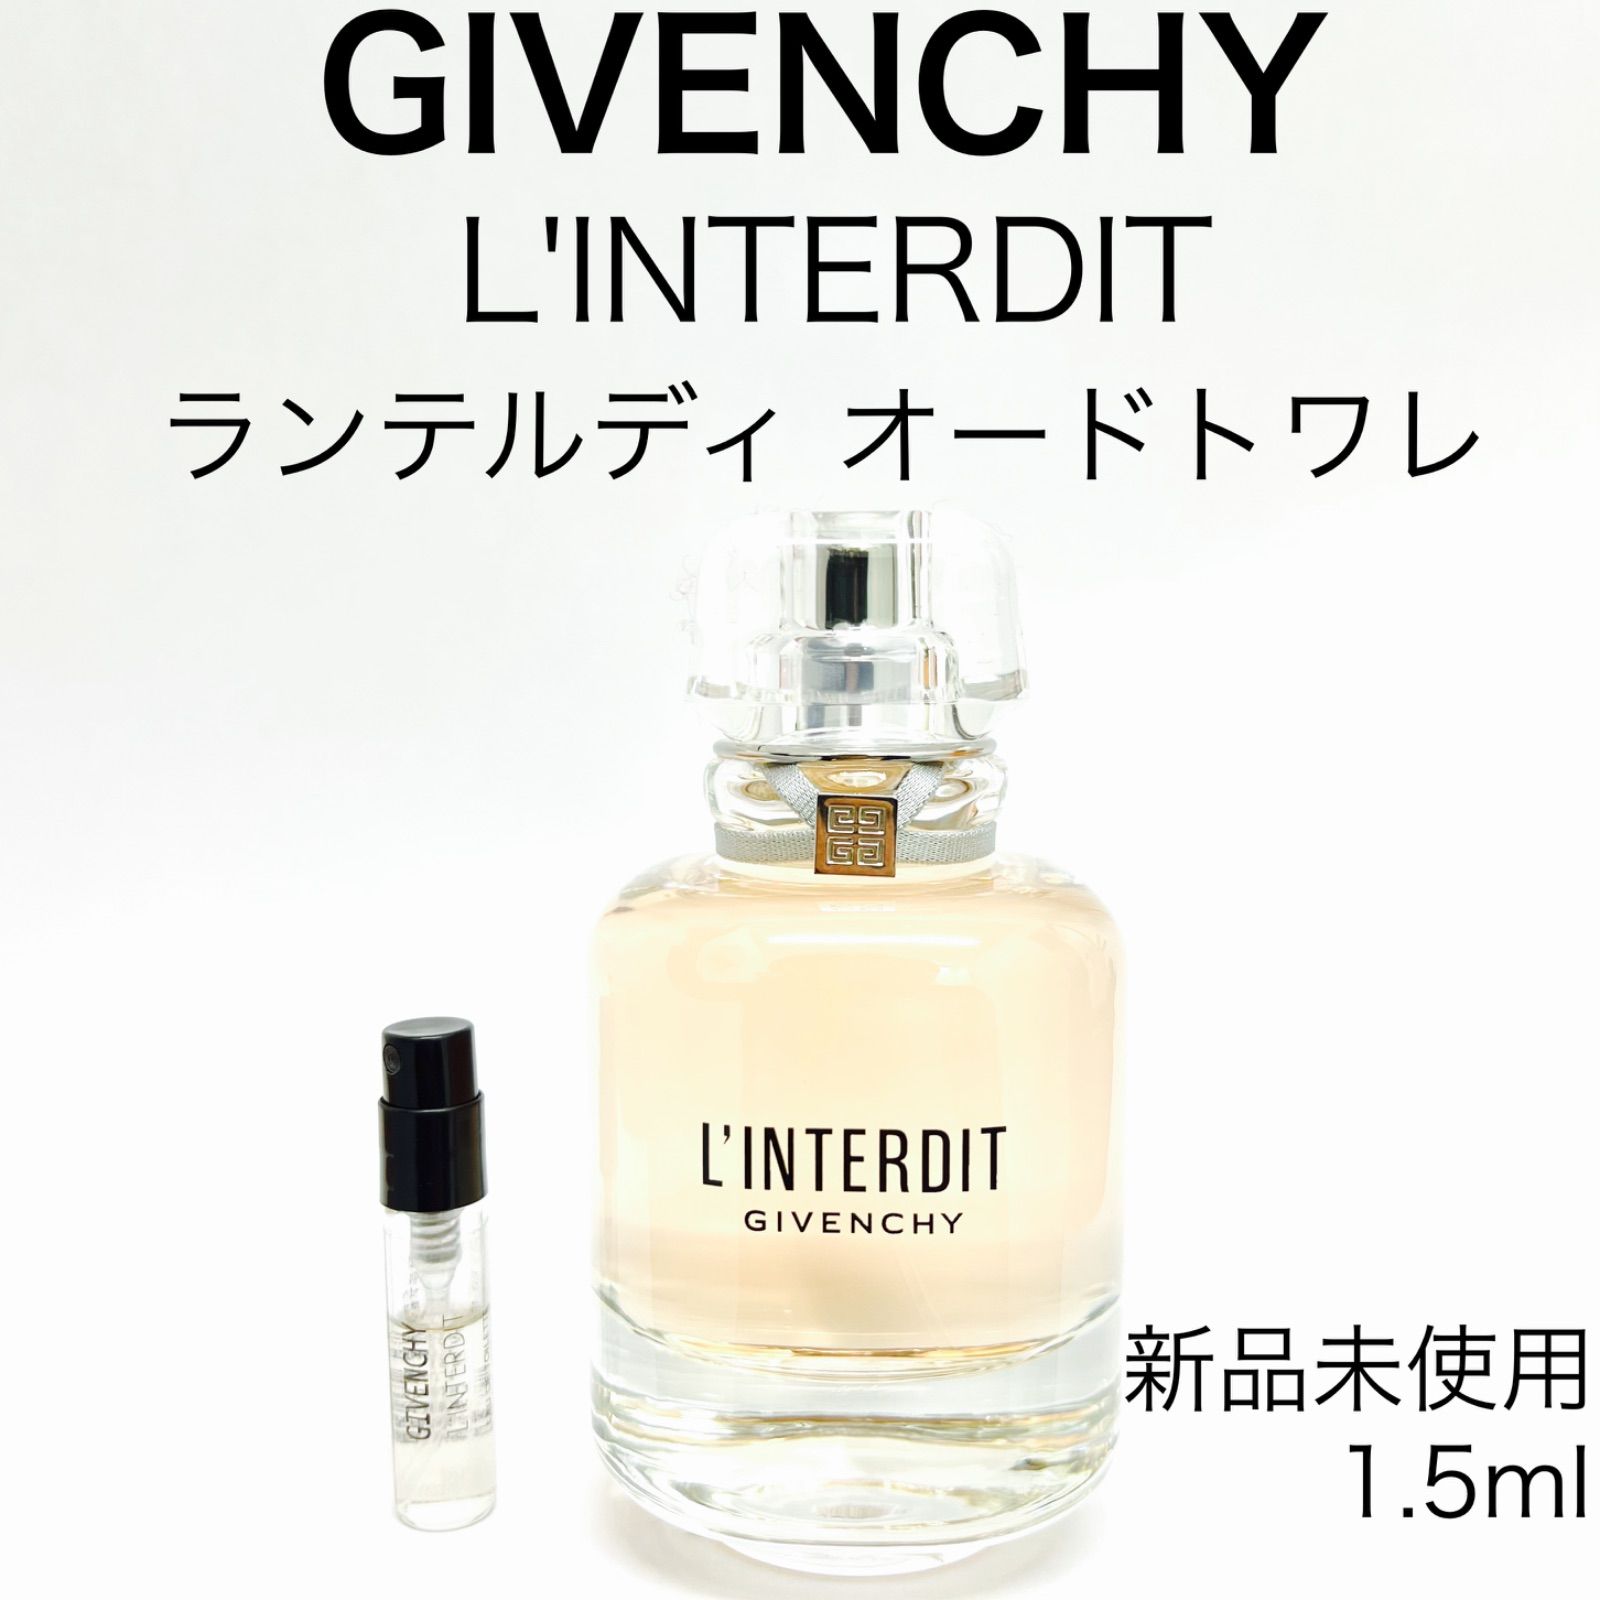 GIVENCHY ジバンシィ ランテルディ 香水 1.5ml 最短即日発送 - セット